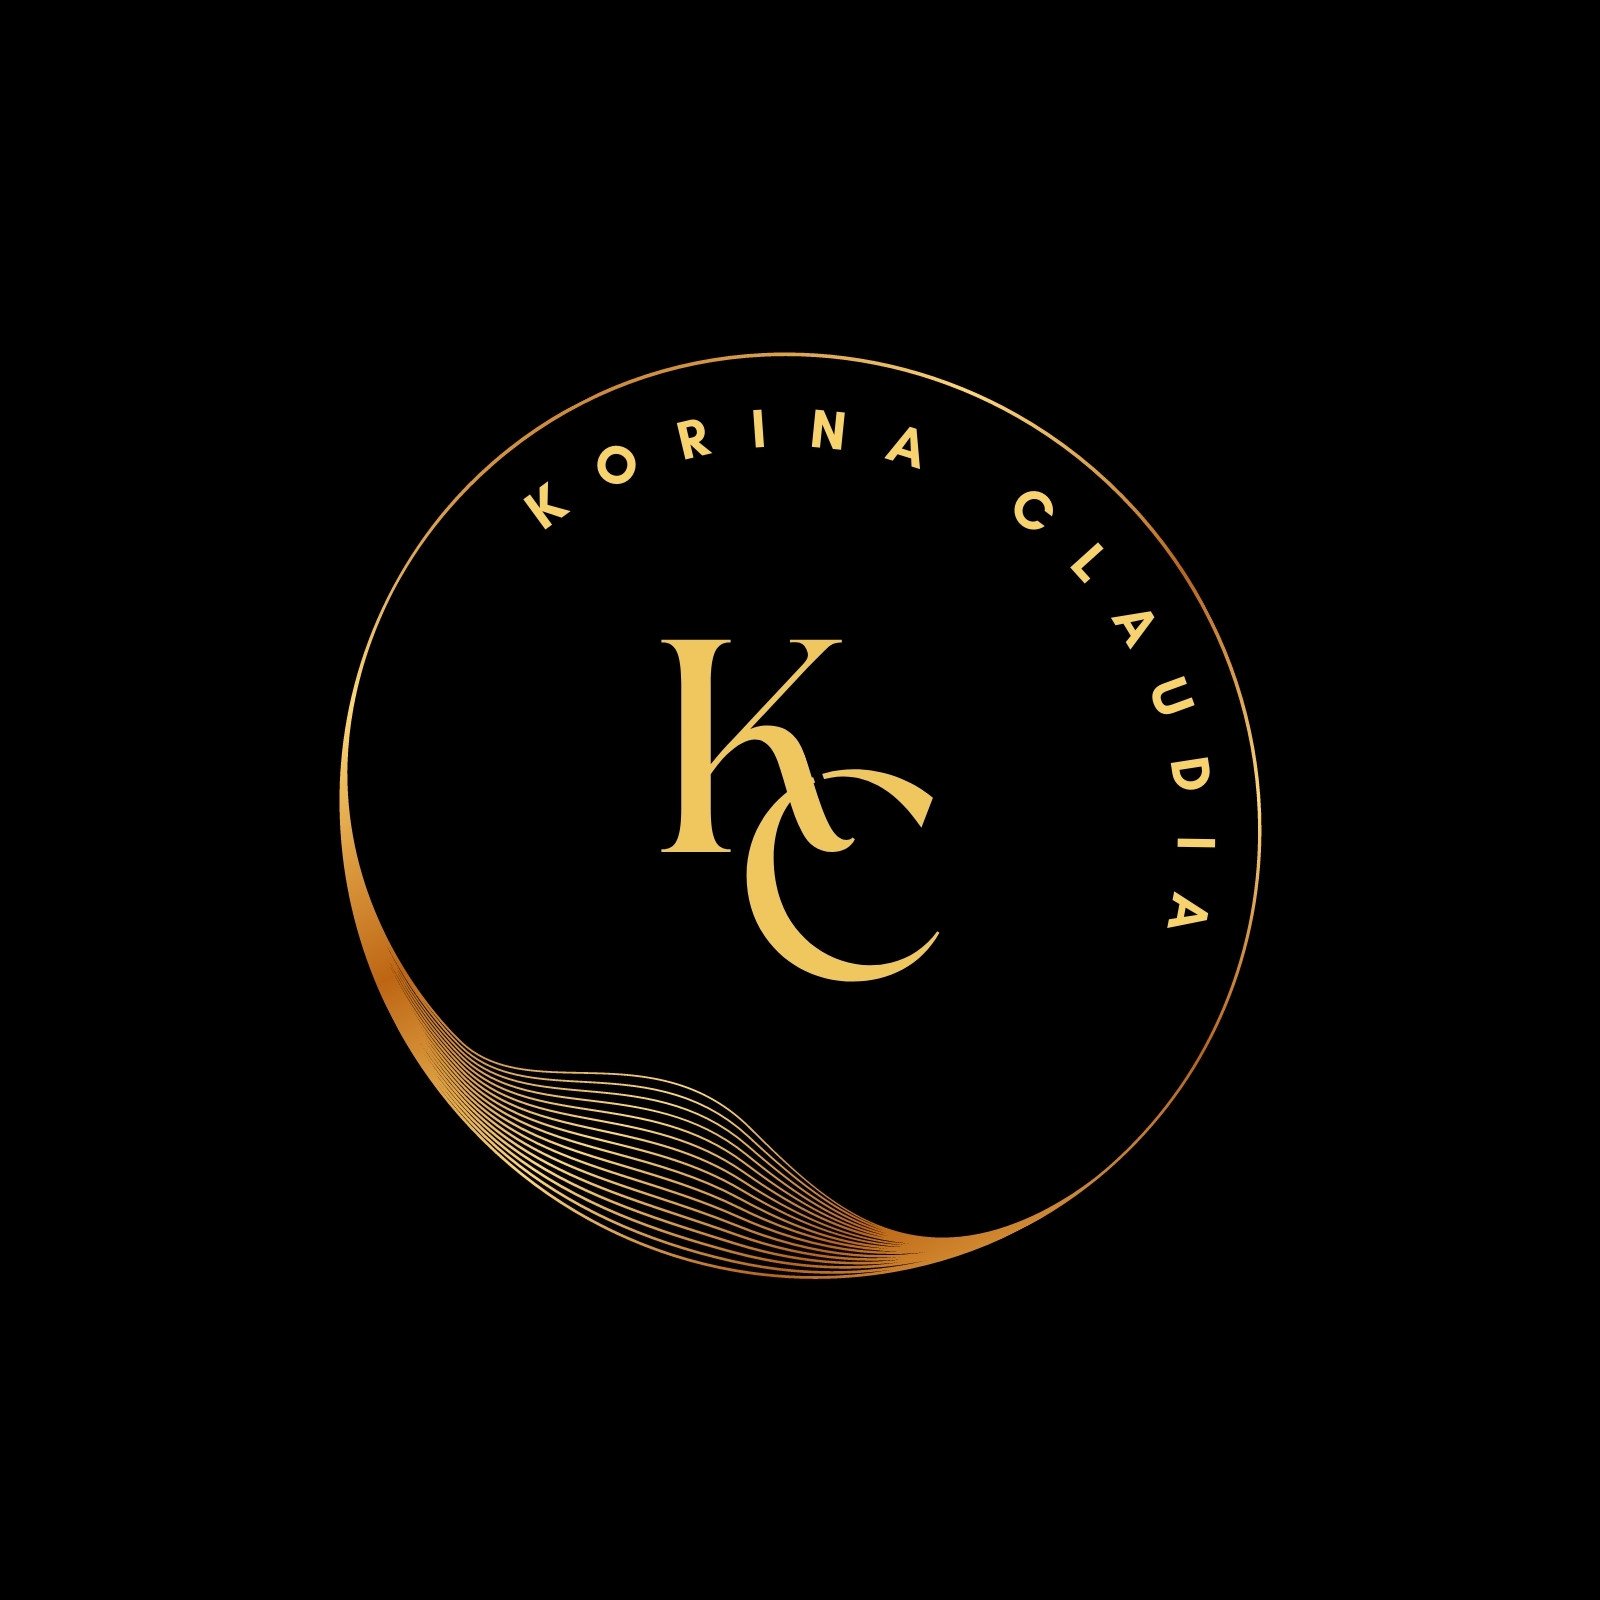 Gold Luxury Initial Circle Logo